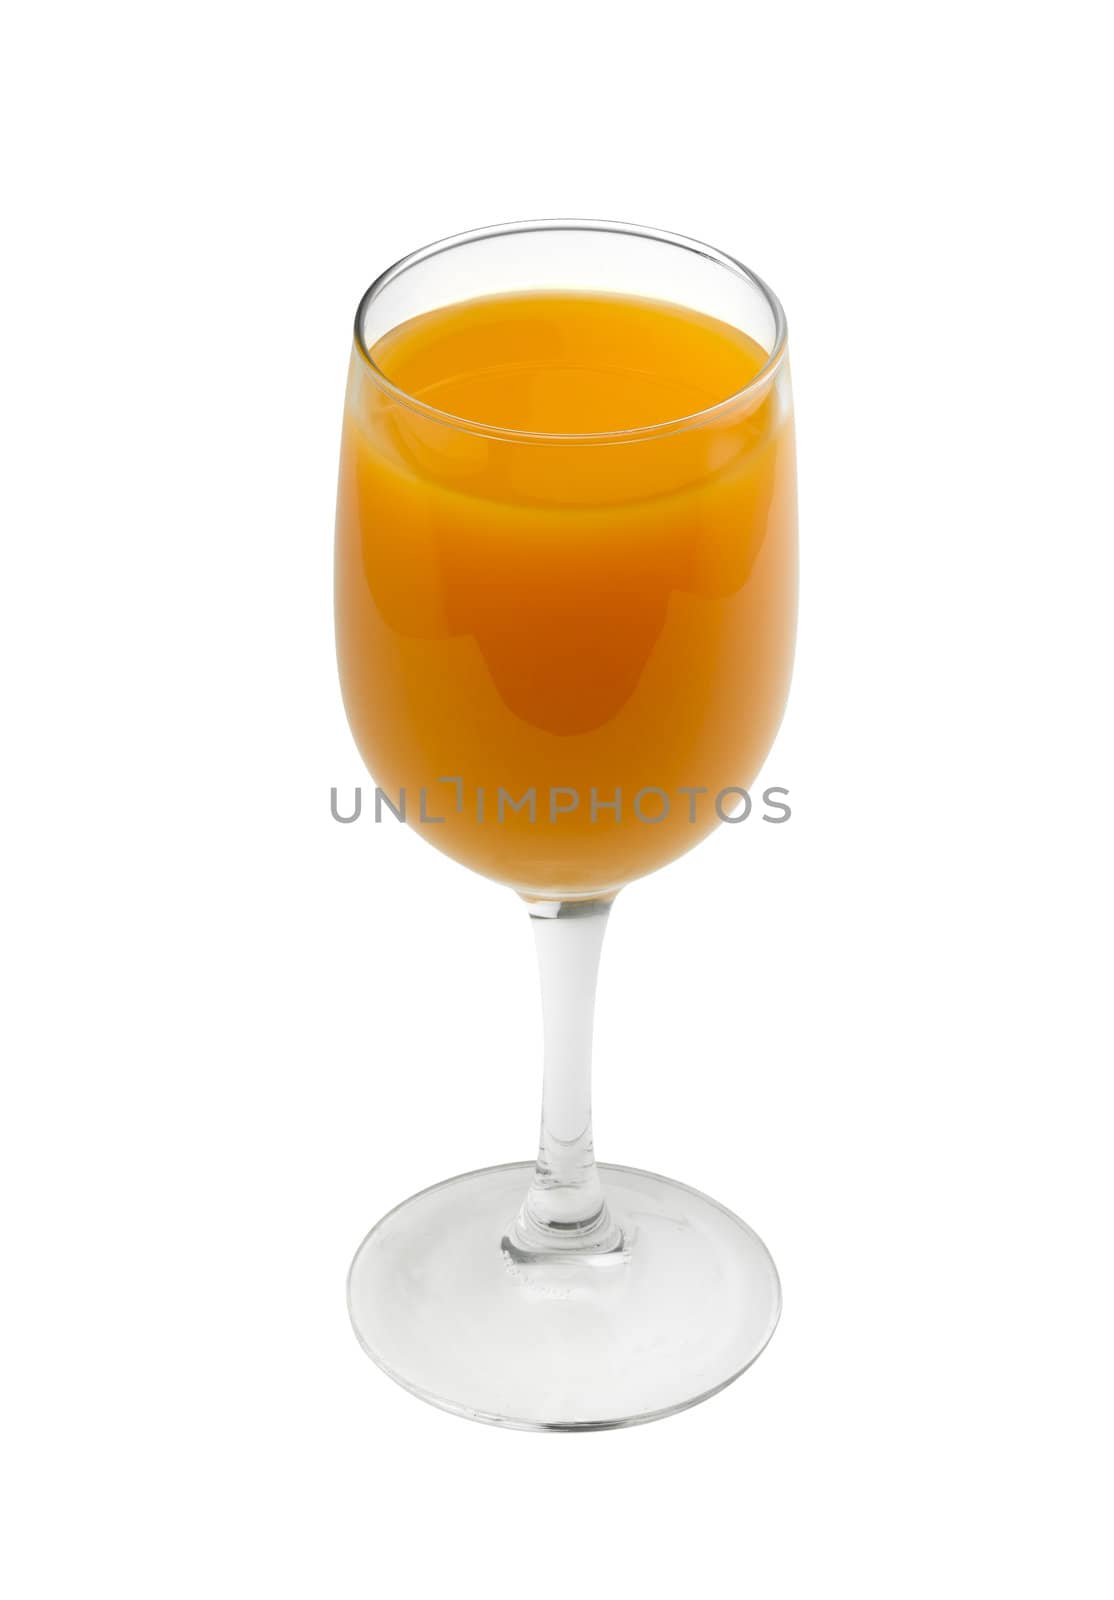 a glass of orange juice on white background
